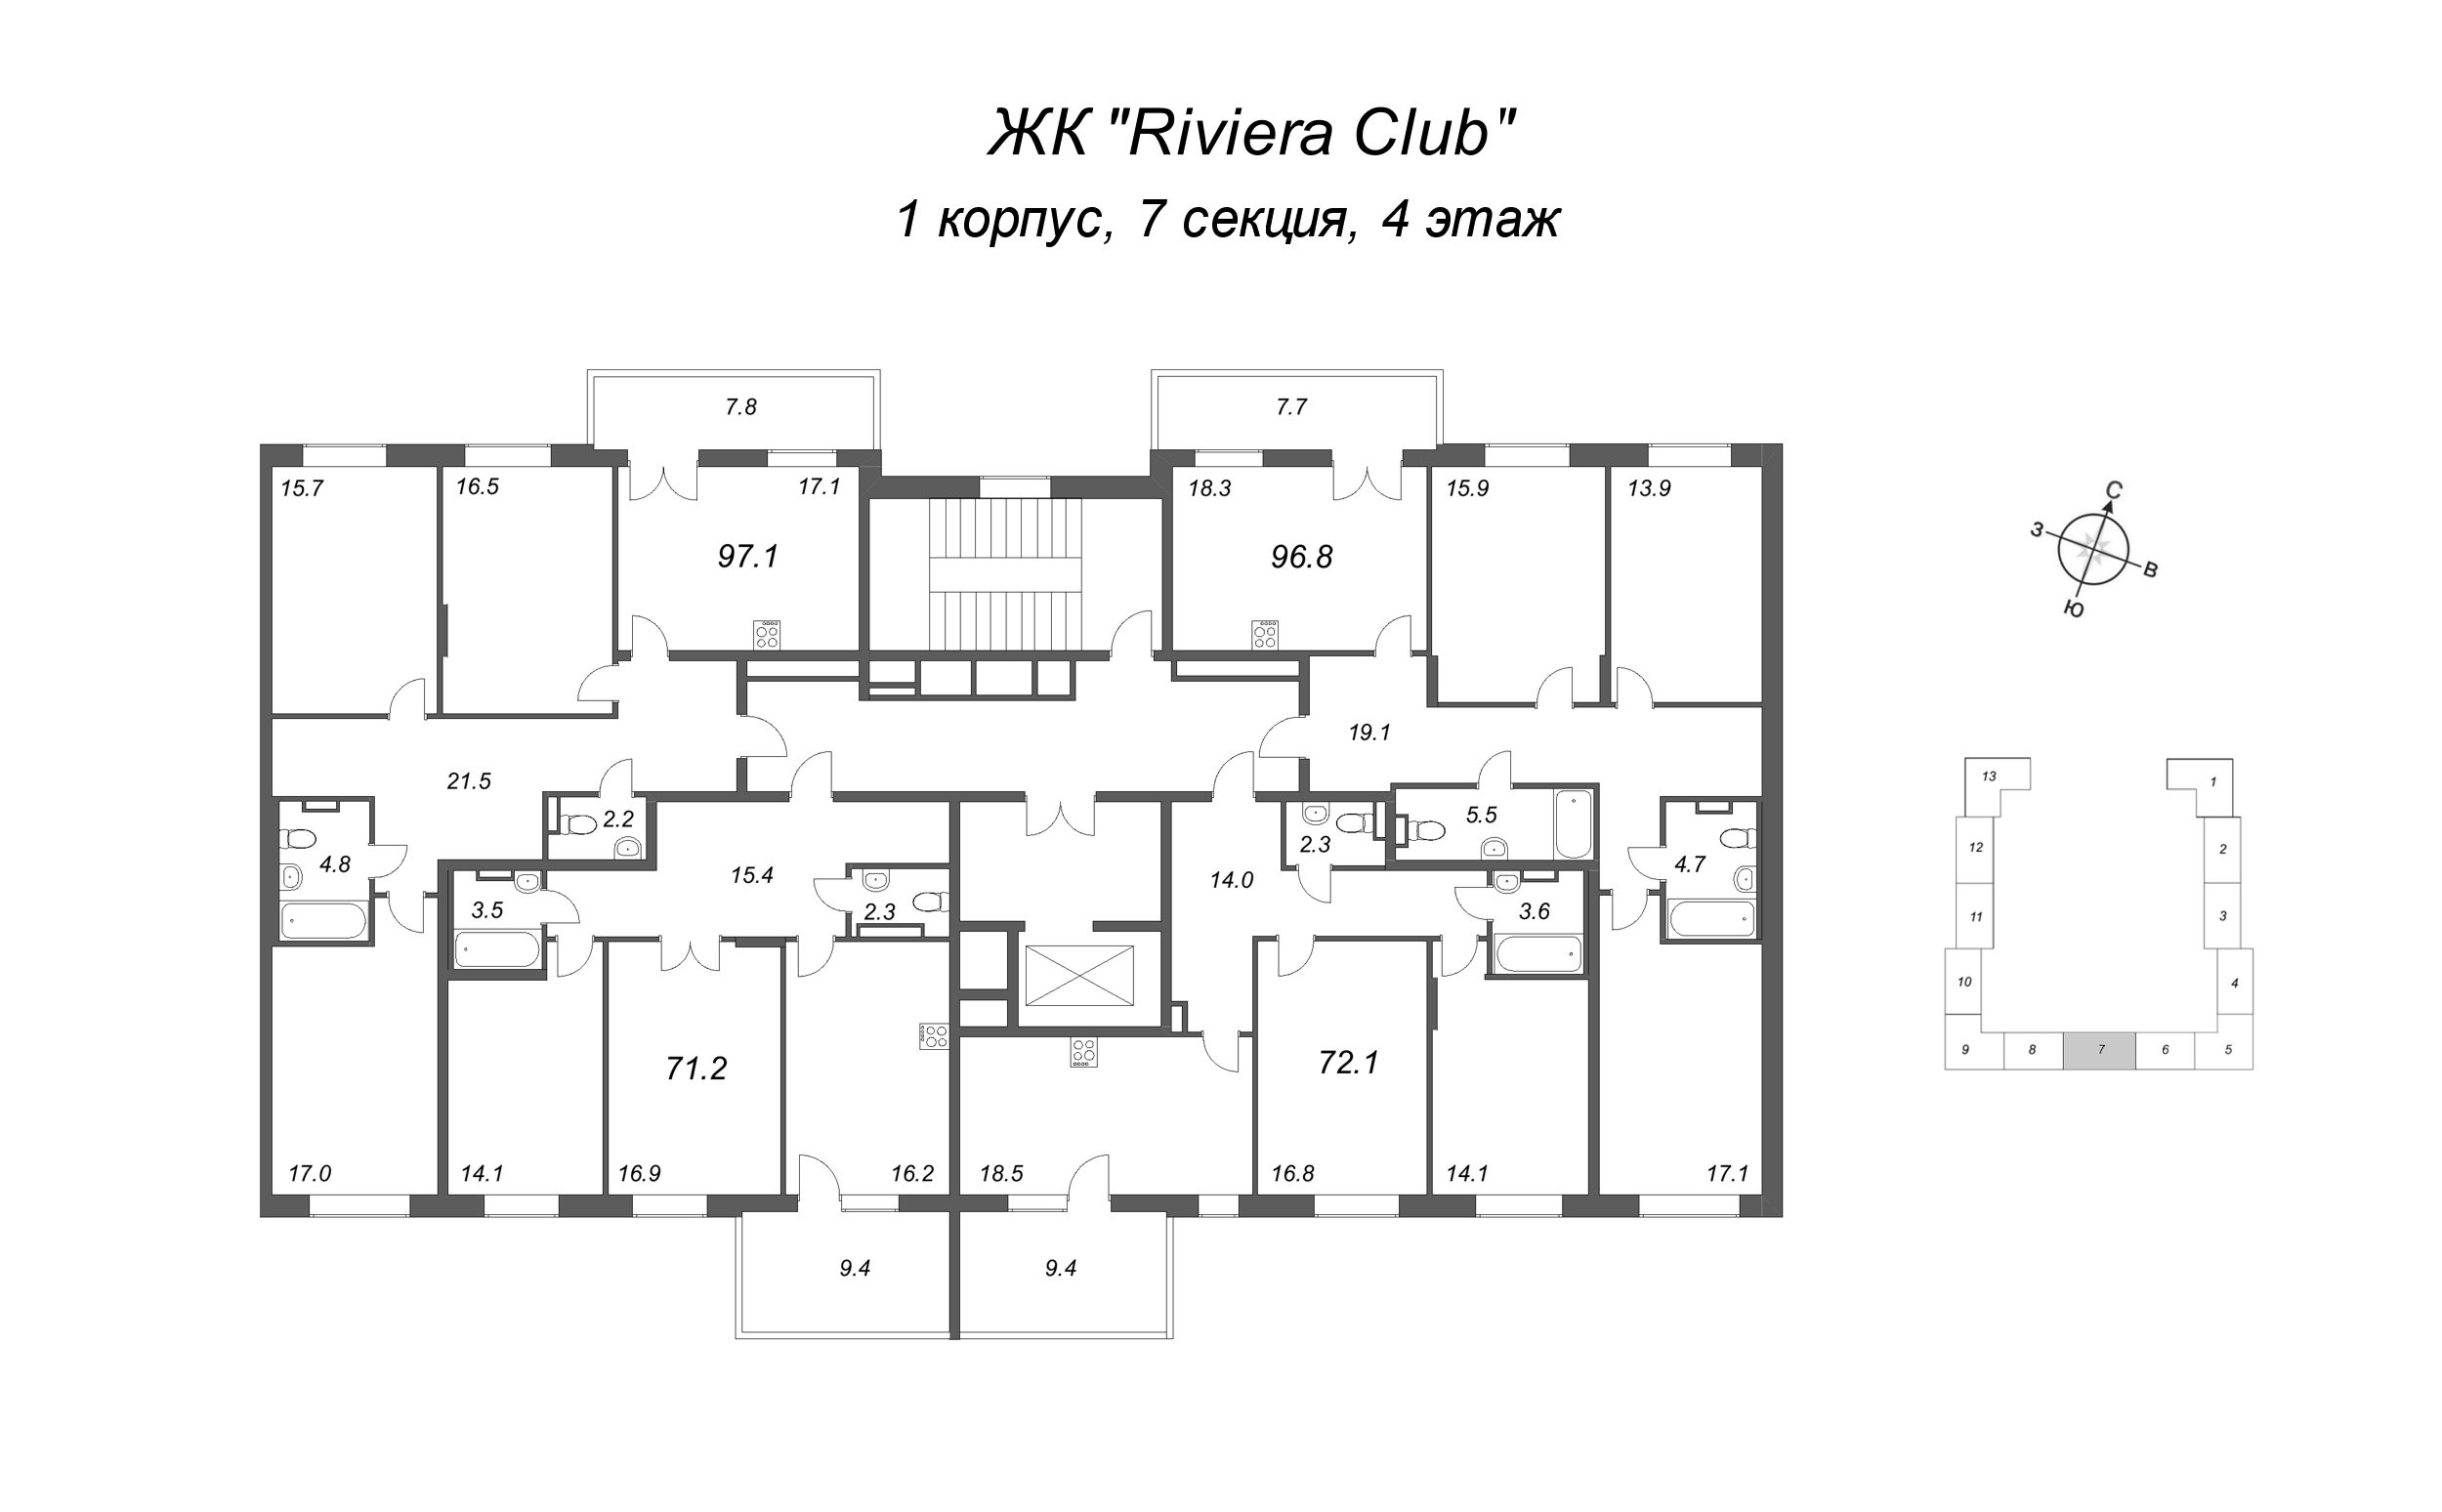 3-комнатная (Евро) квартира, 71.2 м² в ЖК "Riviera Club" - планировка этажа